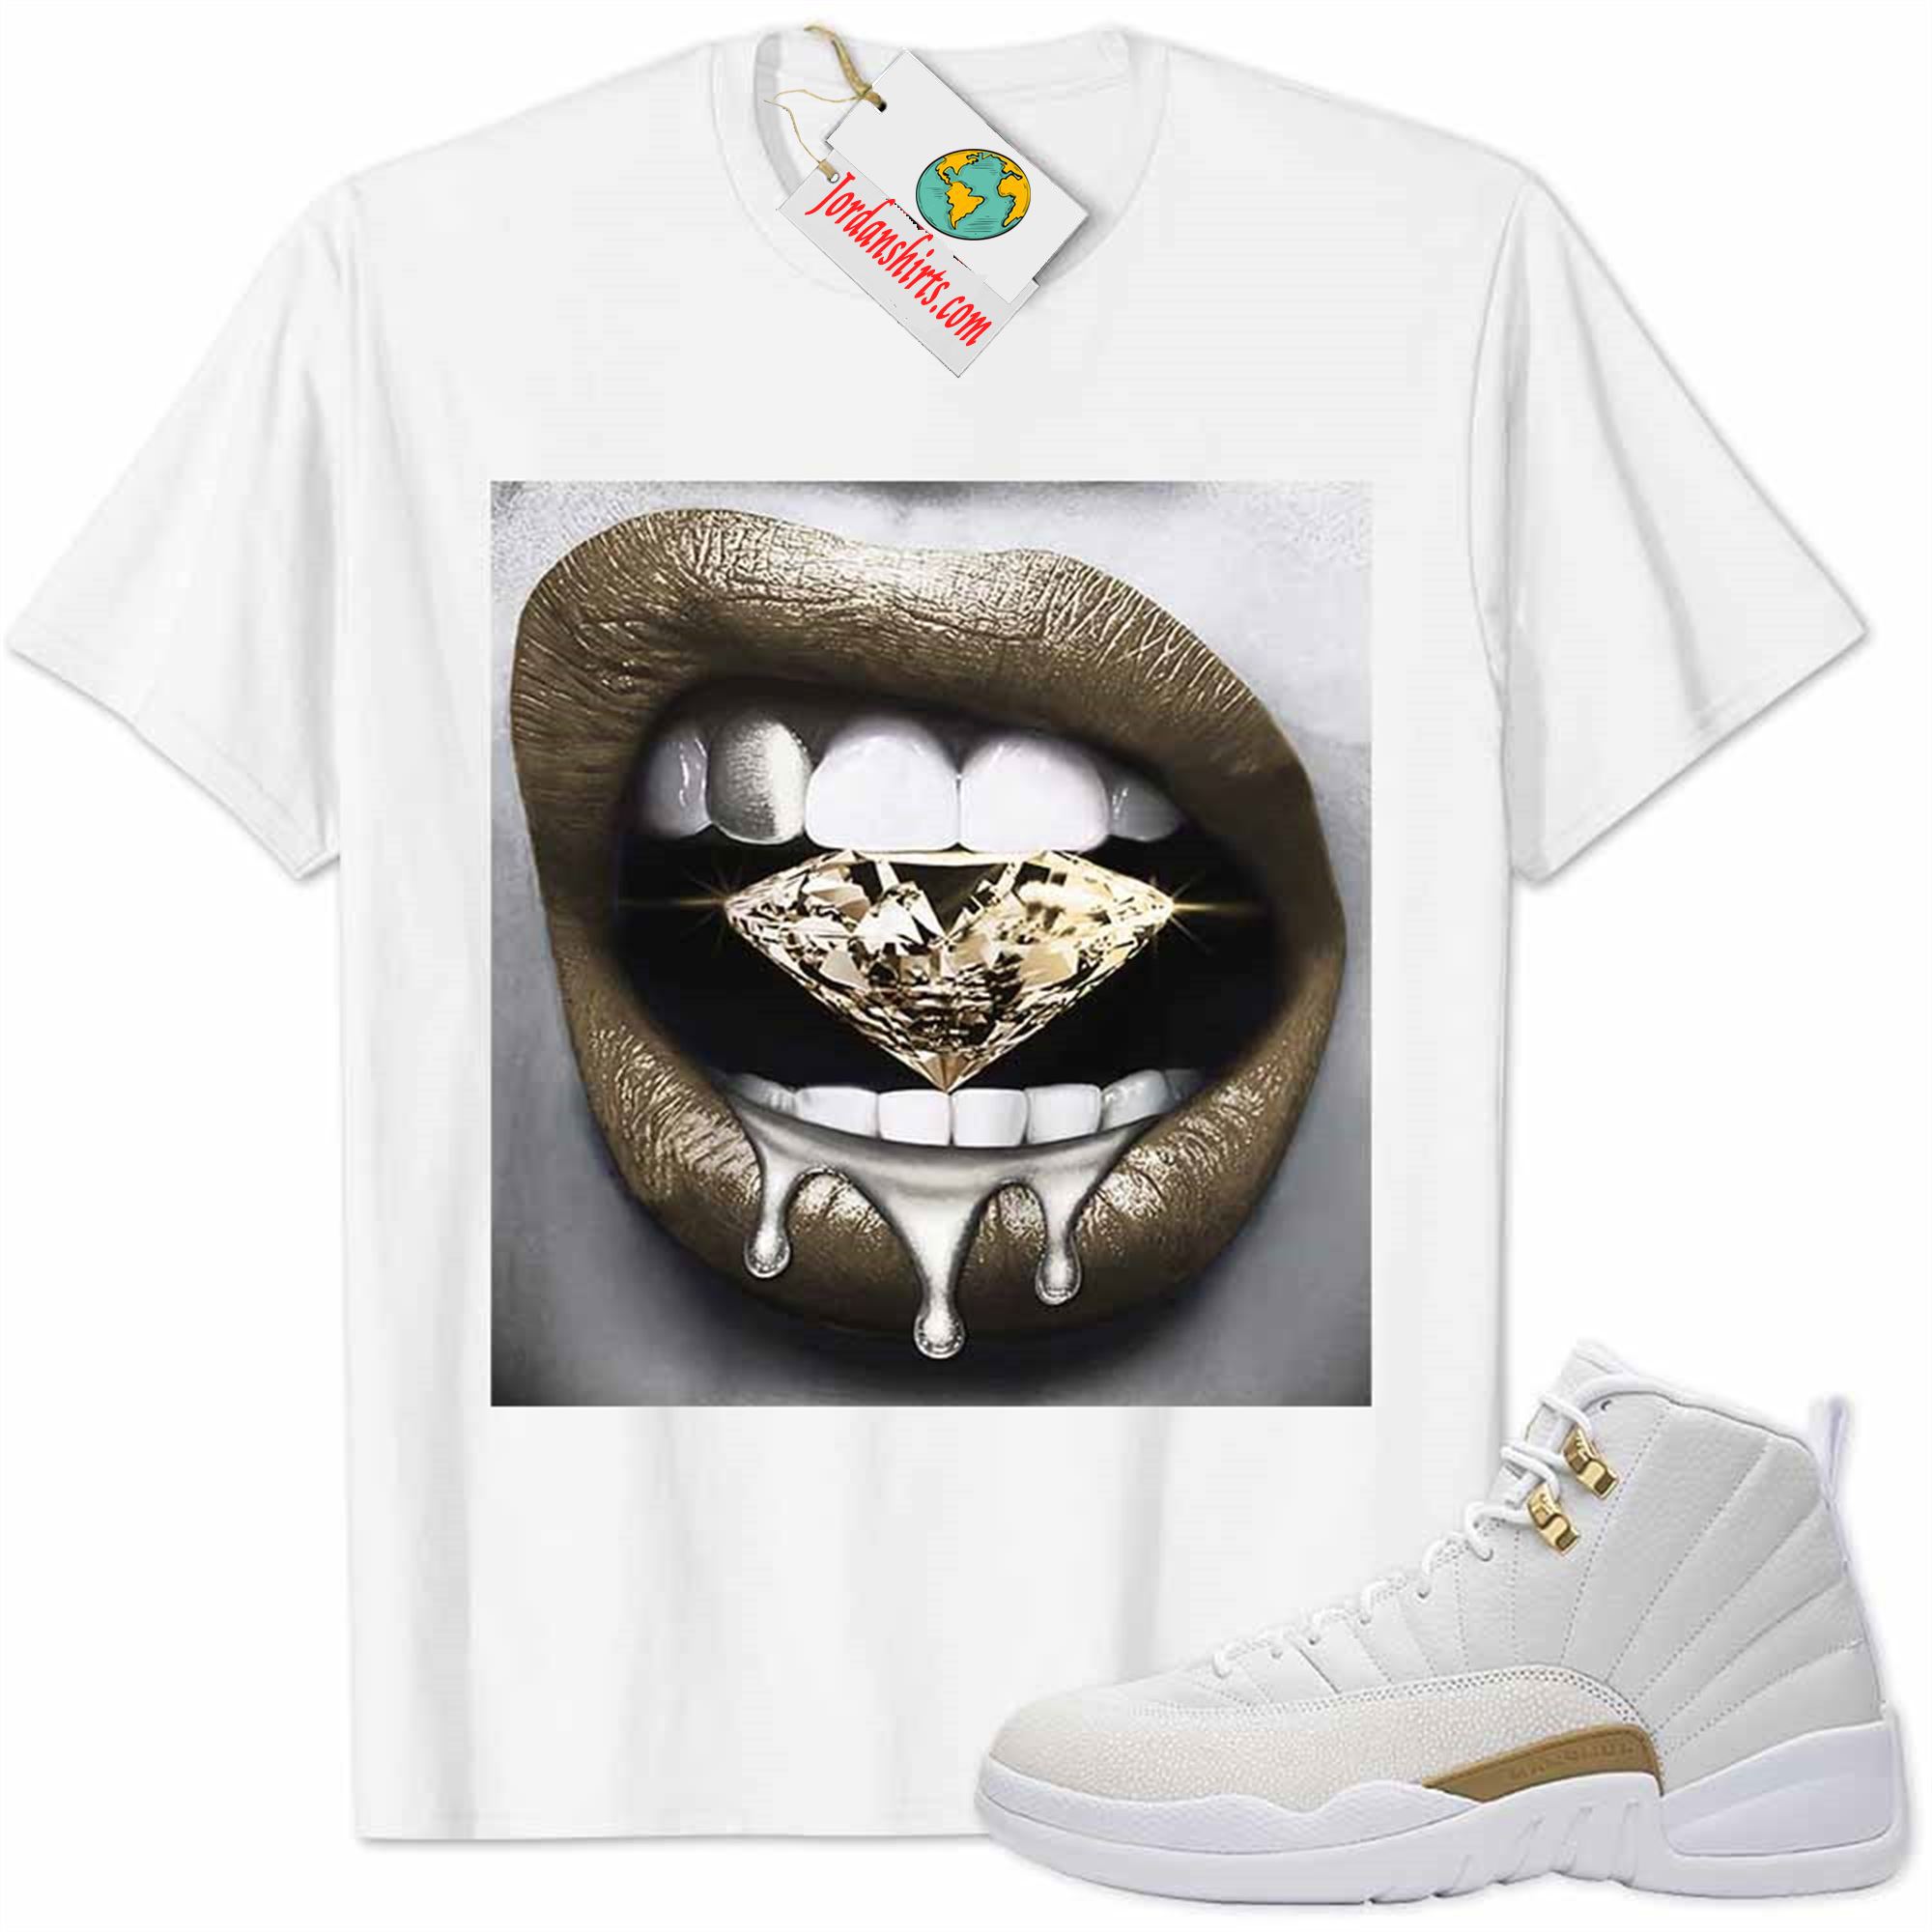 Jordan 12 Shirt, Jordan 12 Ovo Shirt Sexy Lip Bite Diamond Dripping White Full Size Up To 5xl